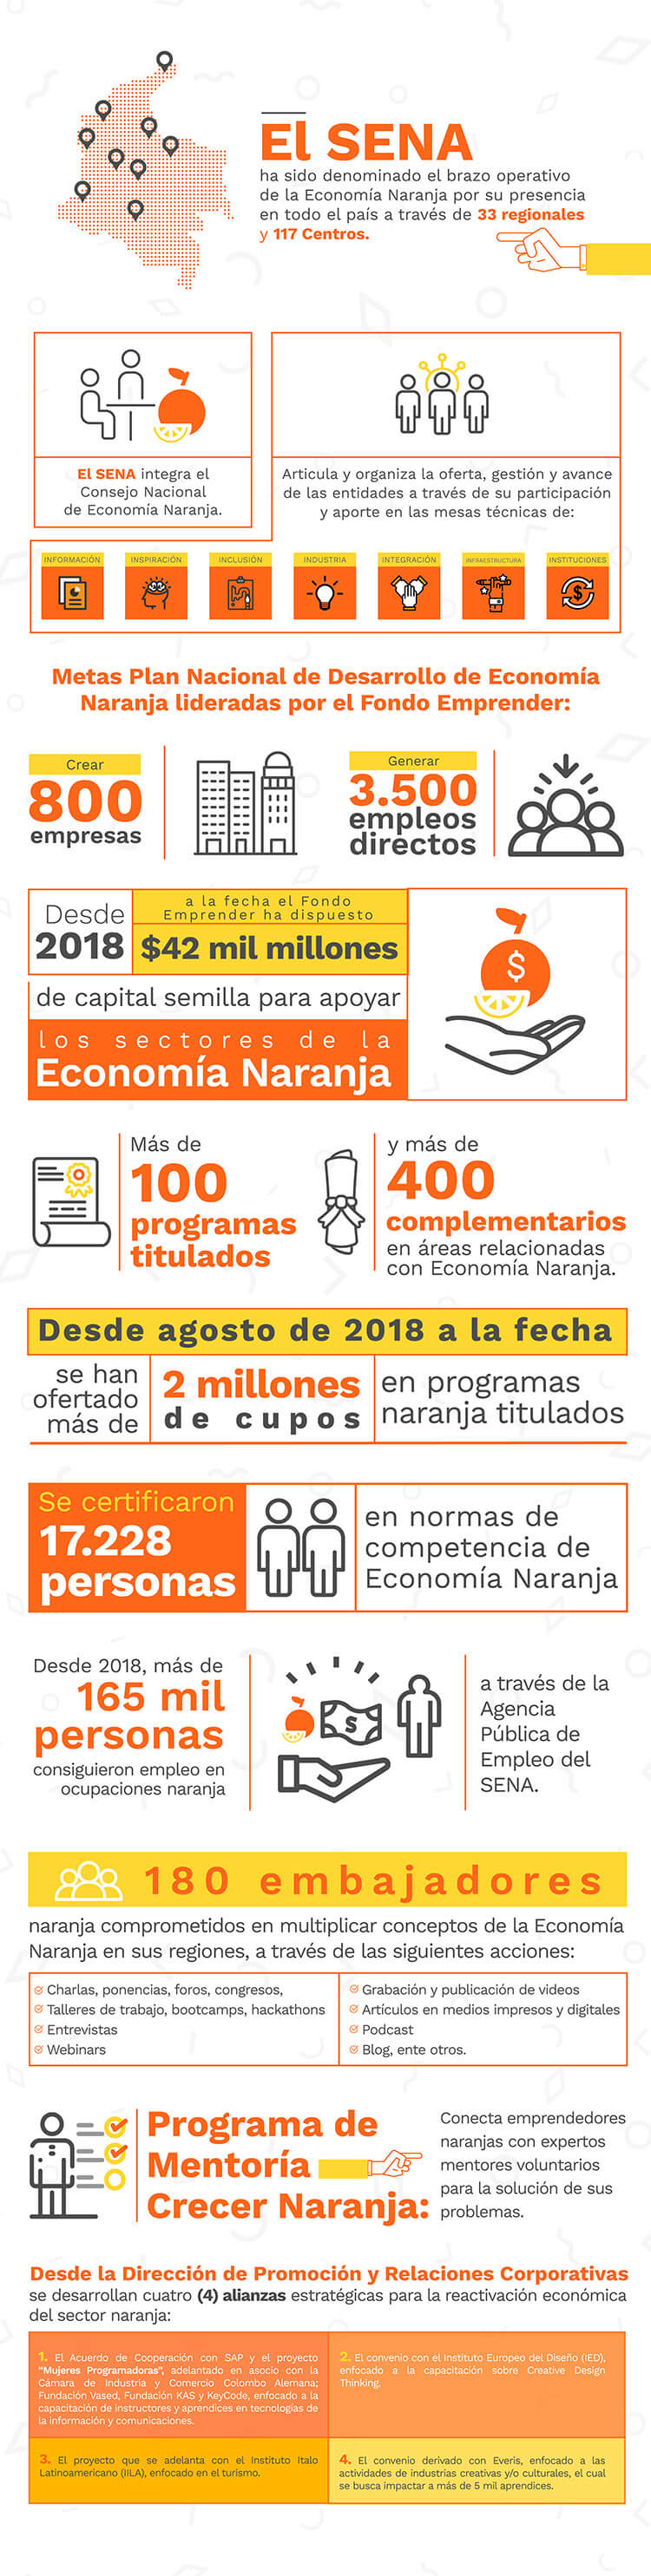 Imagen informativa sobre la economia naranja